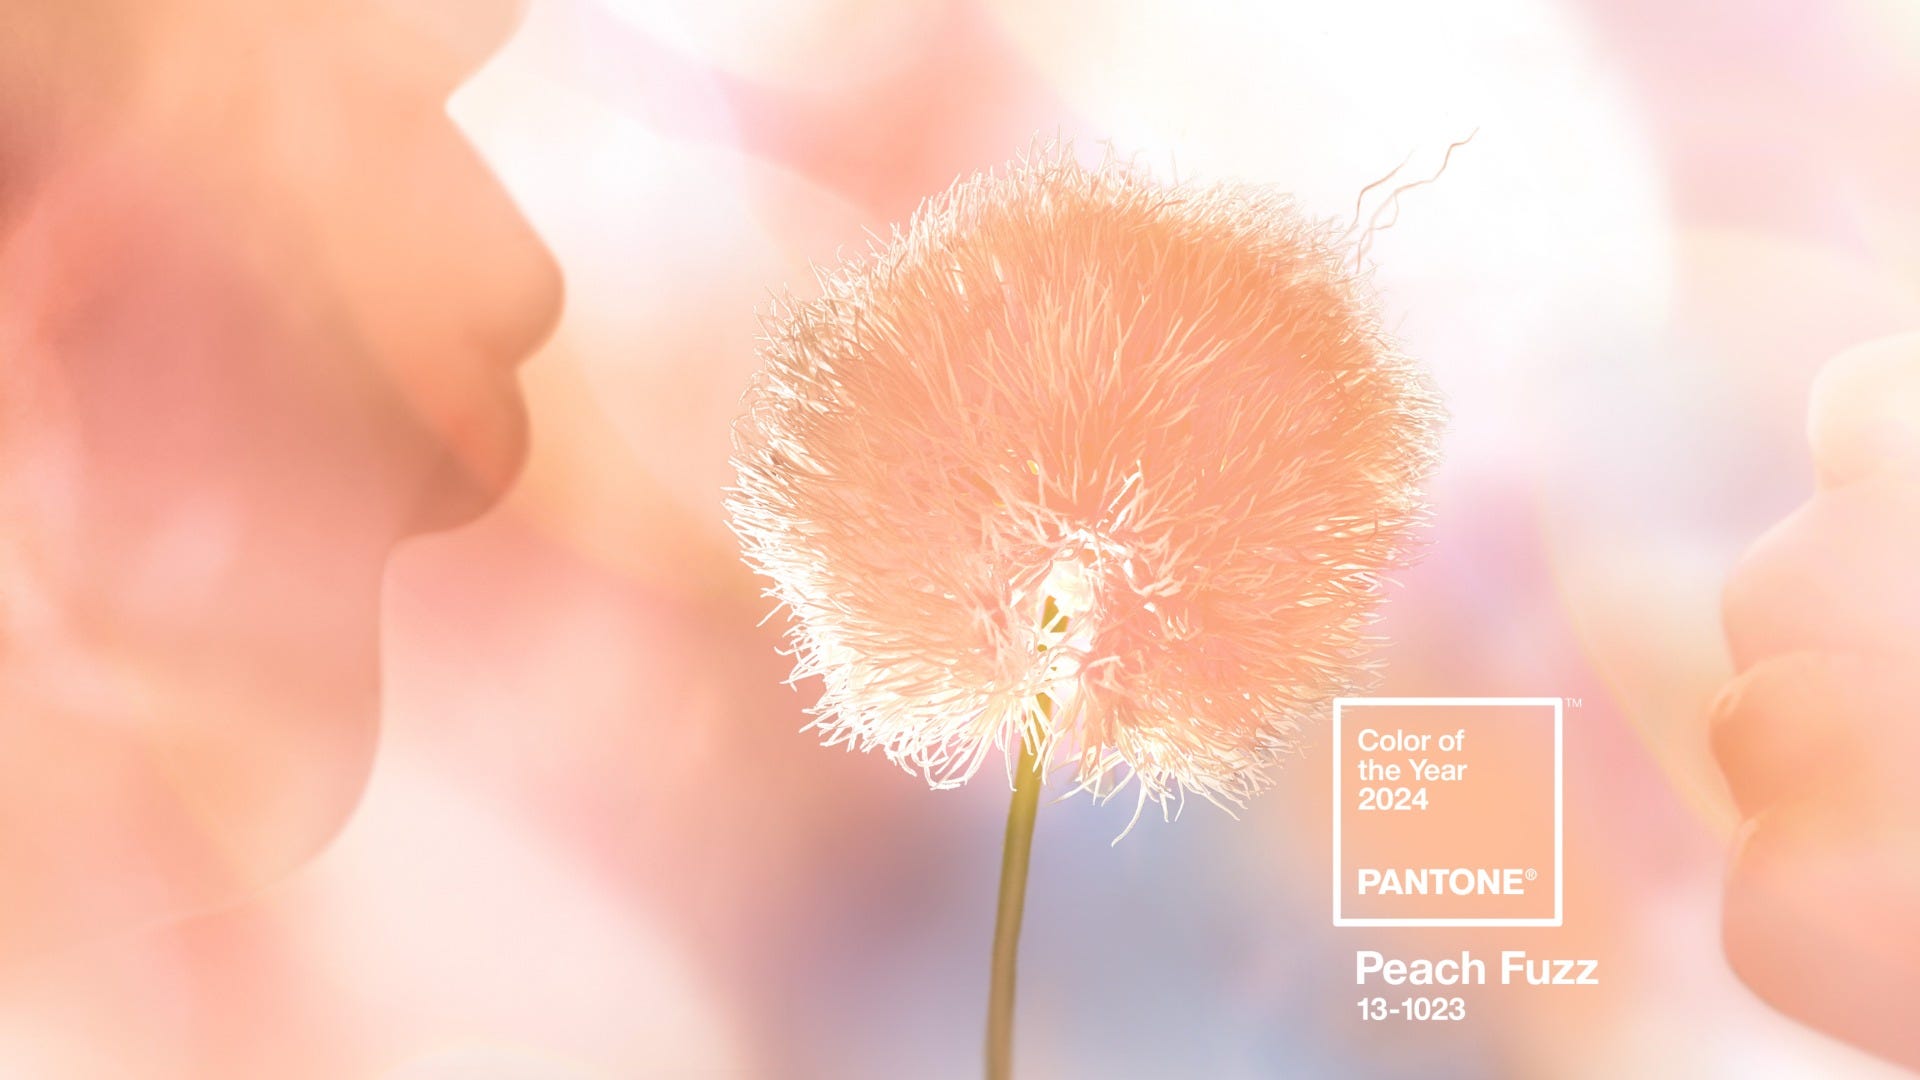 Enriching the 2024 era with the heartful Pantone Peach Fuzz